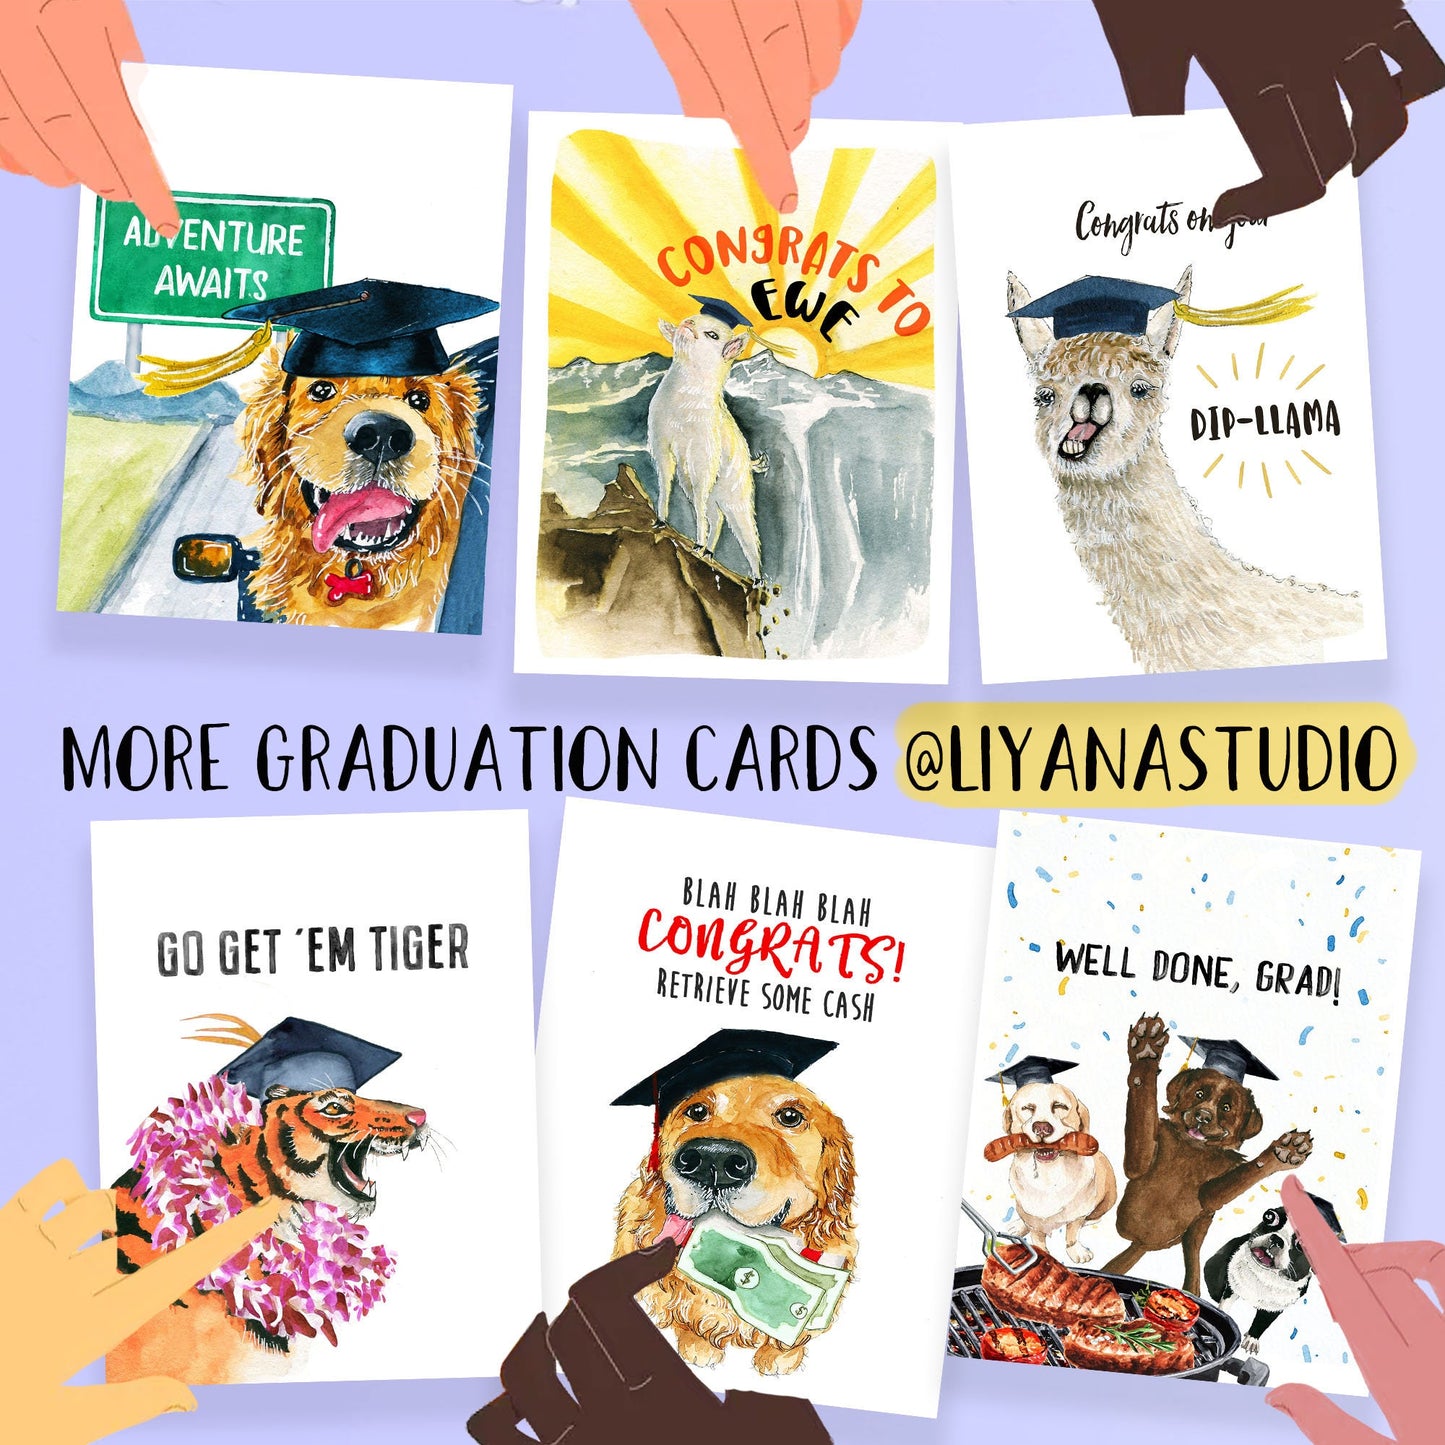 Corgi Dog Graduation Cards Funny - Congrats Smart Ass Corgi Butt - Confetti Congratulations Card For Son